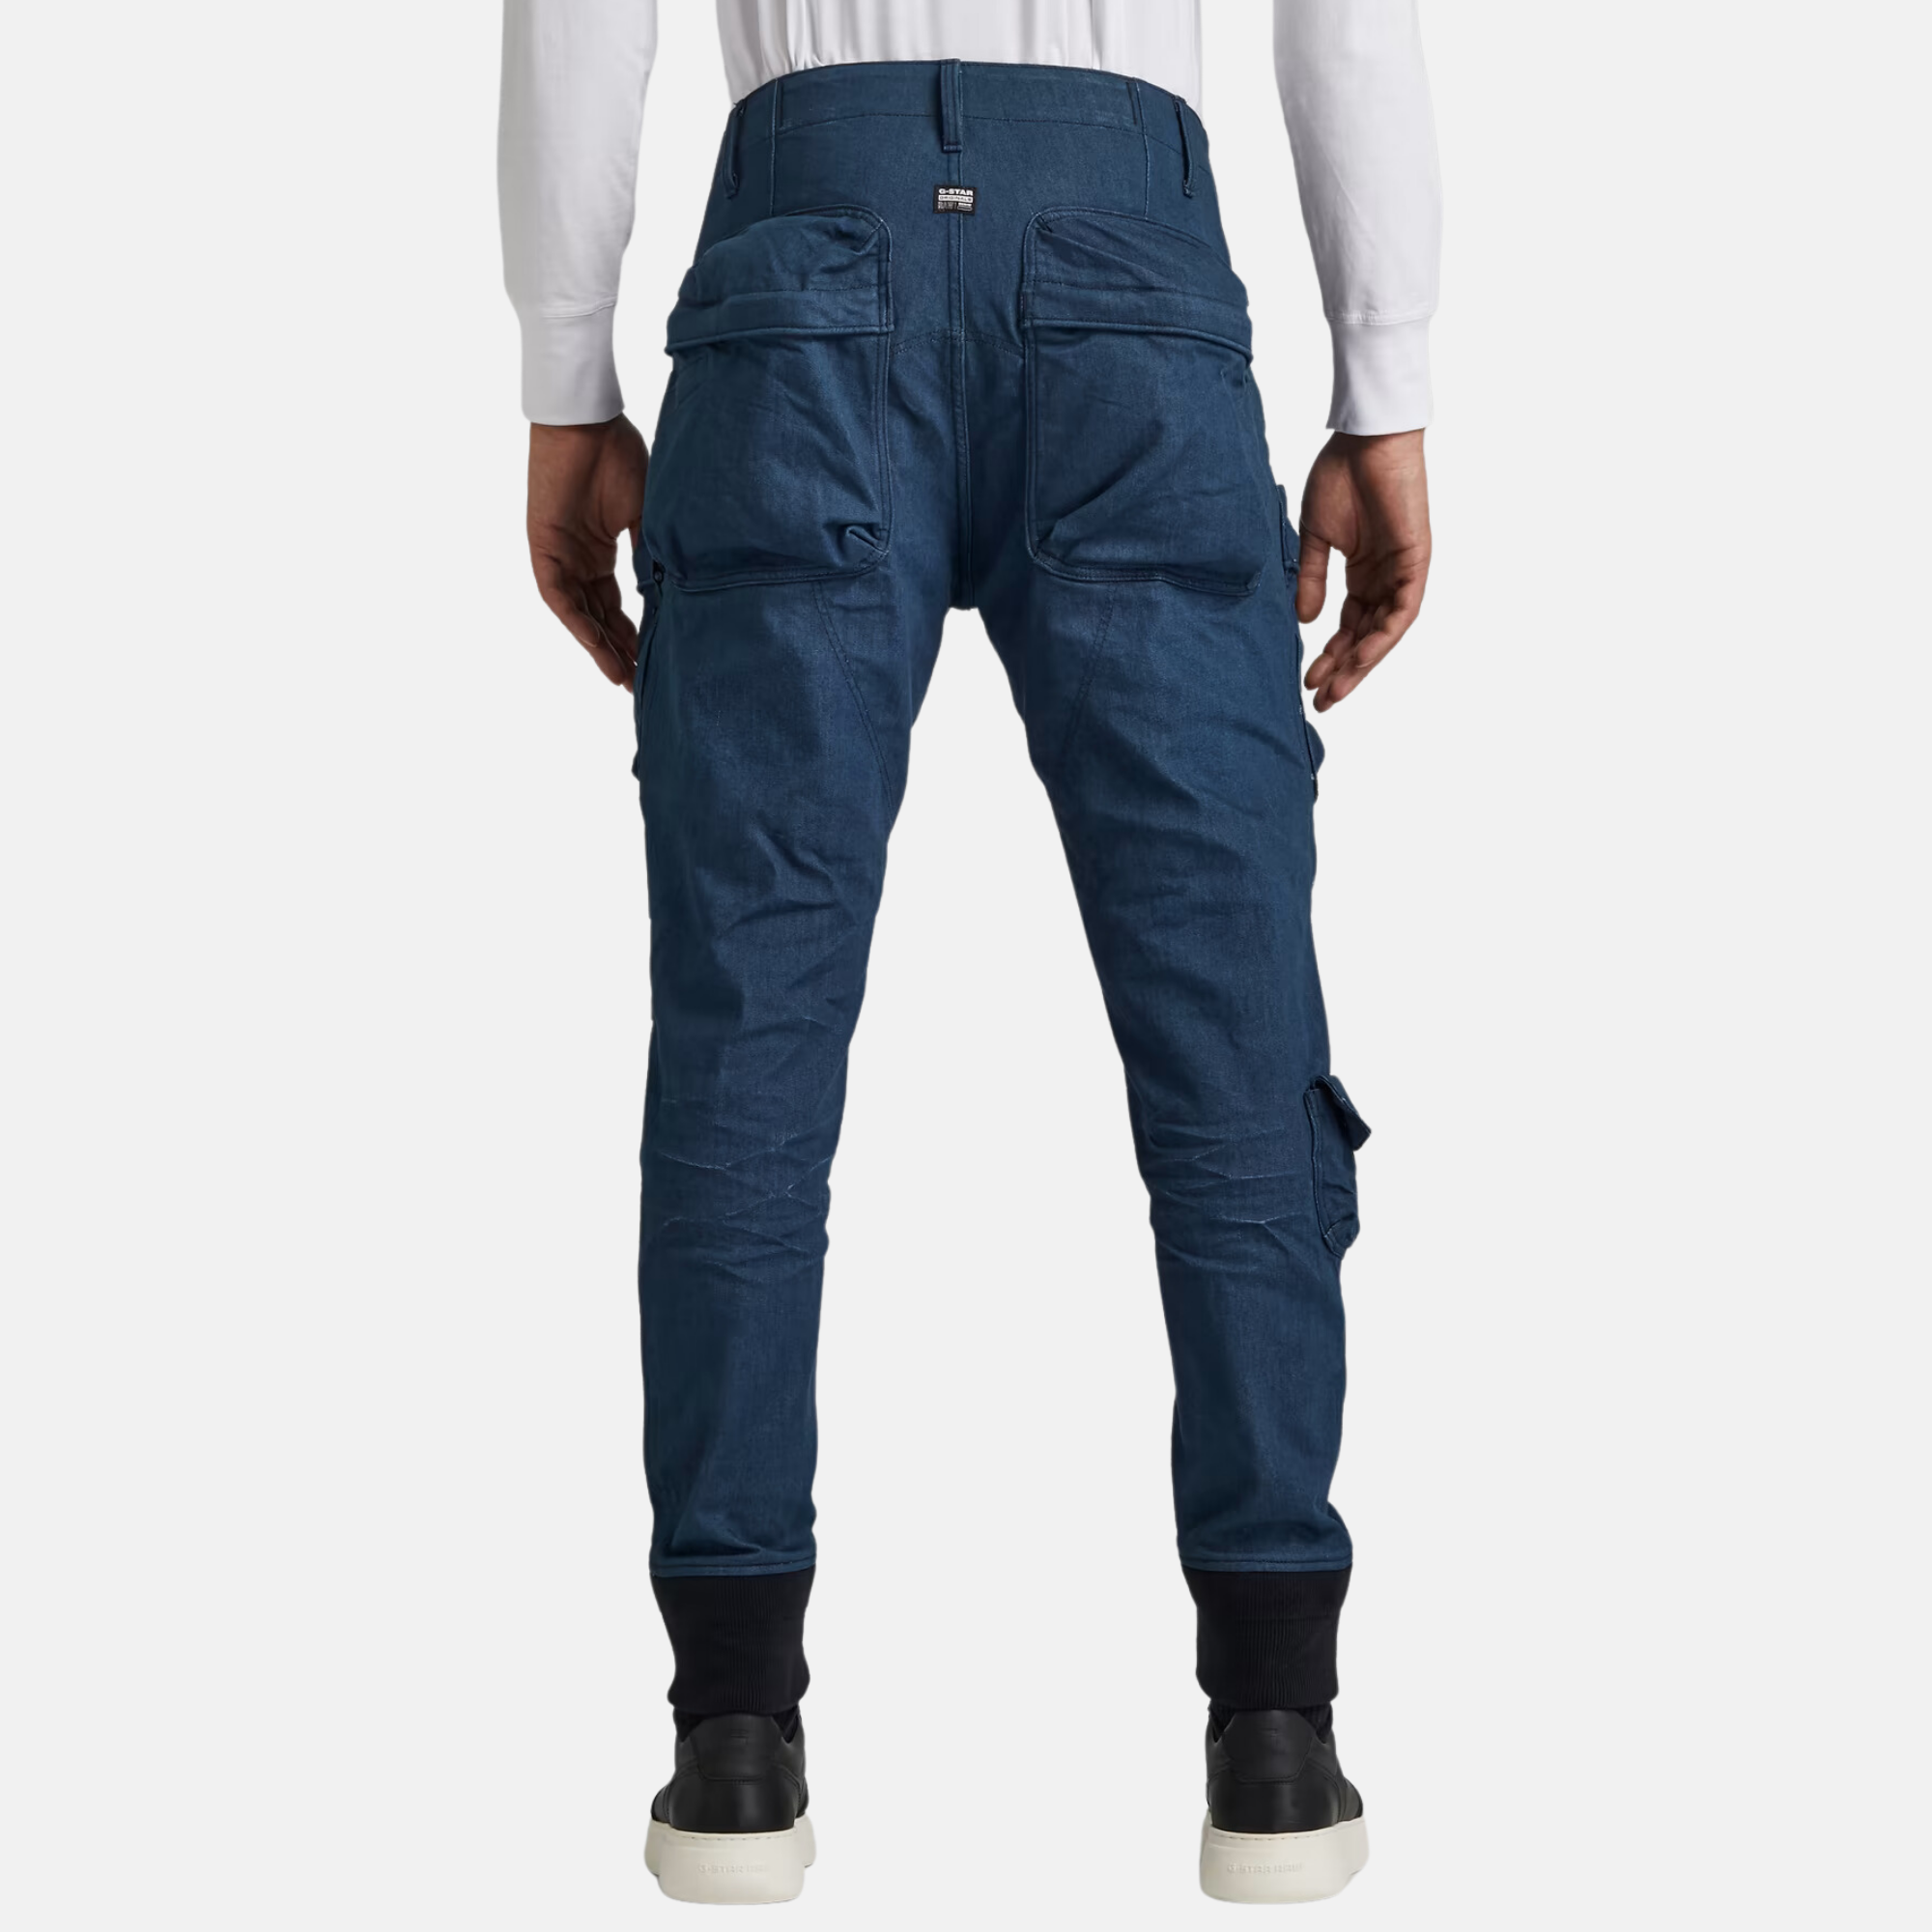 G-Star Raw Men's Zip Pocket 3D Skinny Fit Cargo Pants, Dark Black, 28W x  30L at Amazon Men's Clothing store